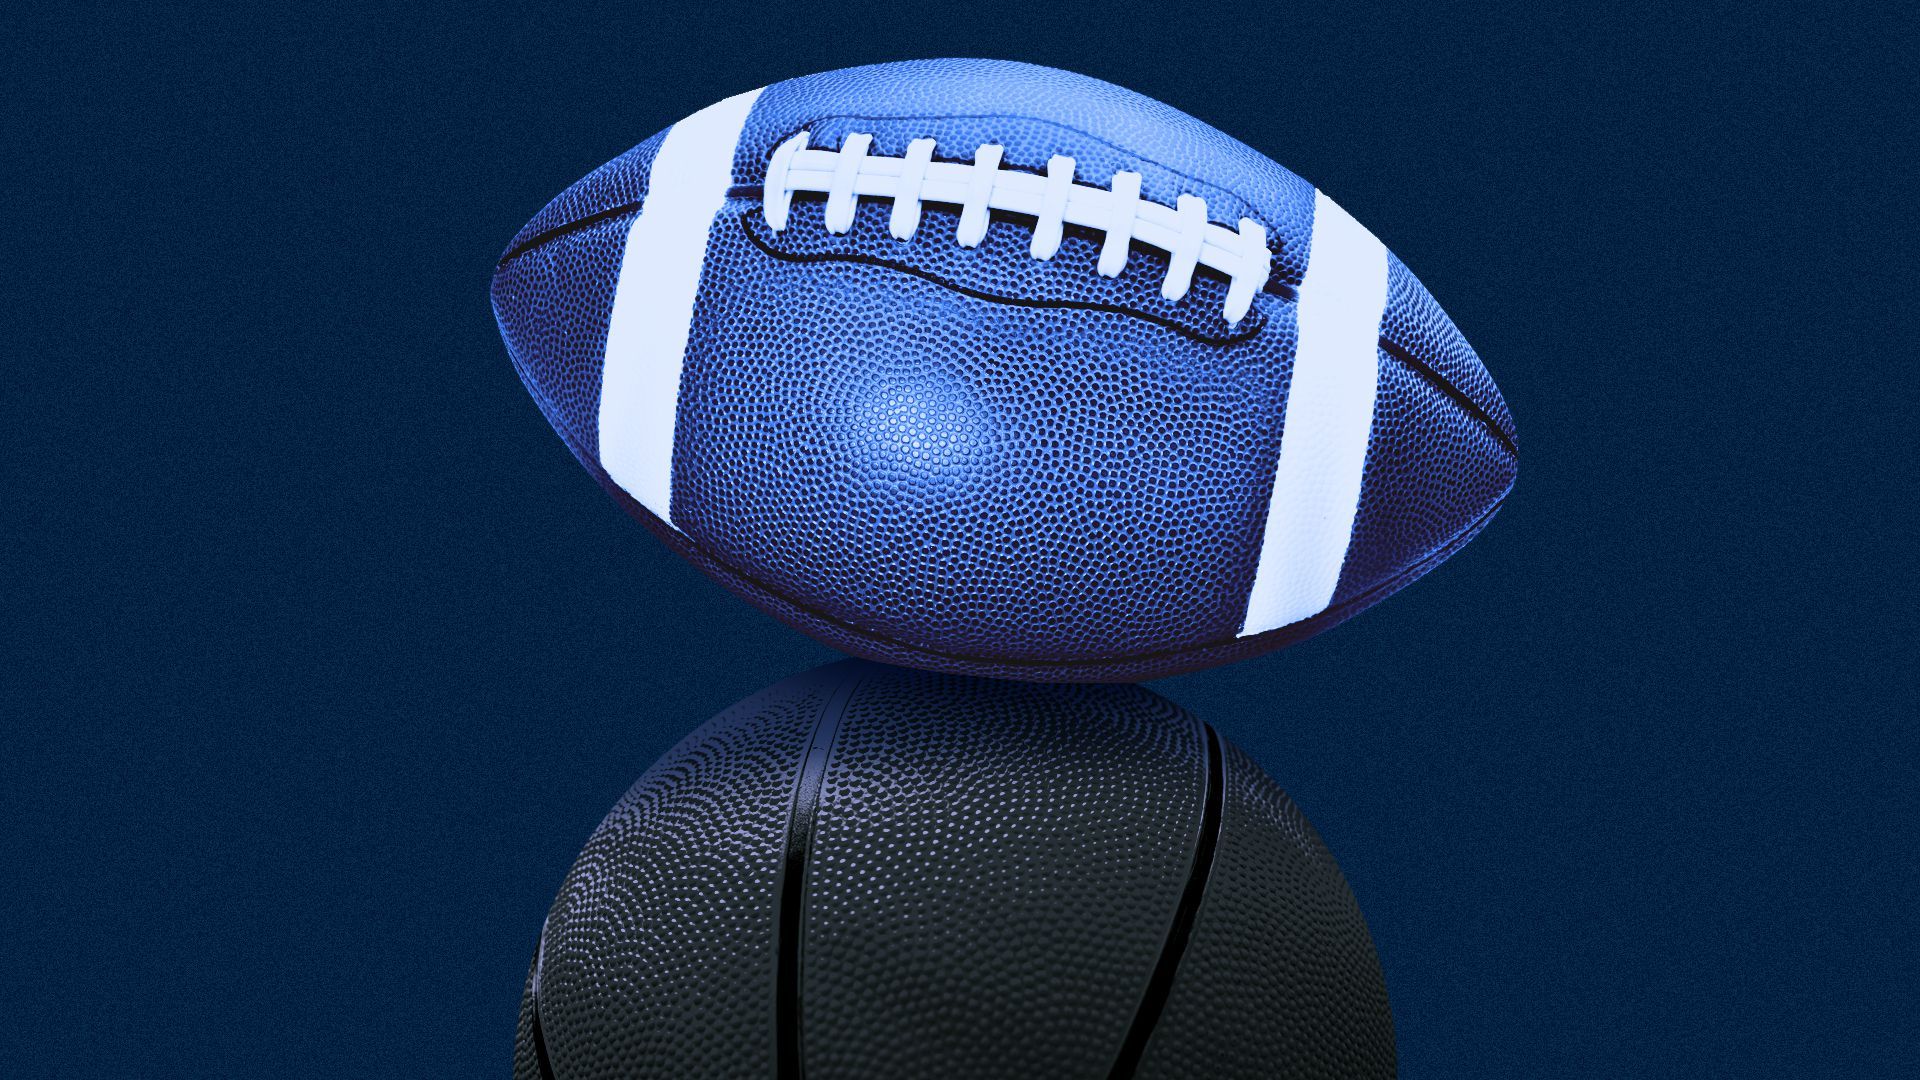 Illustration of a blue football balancing atop a basketball